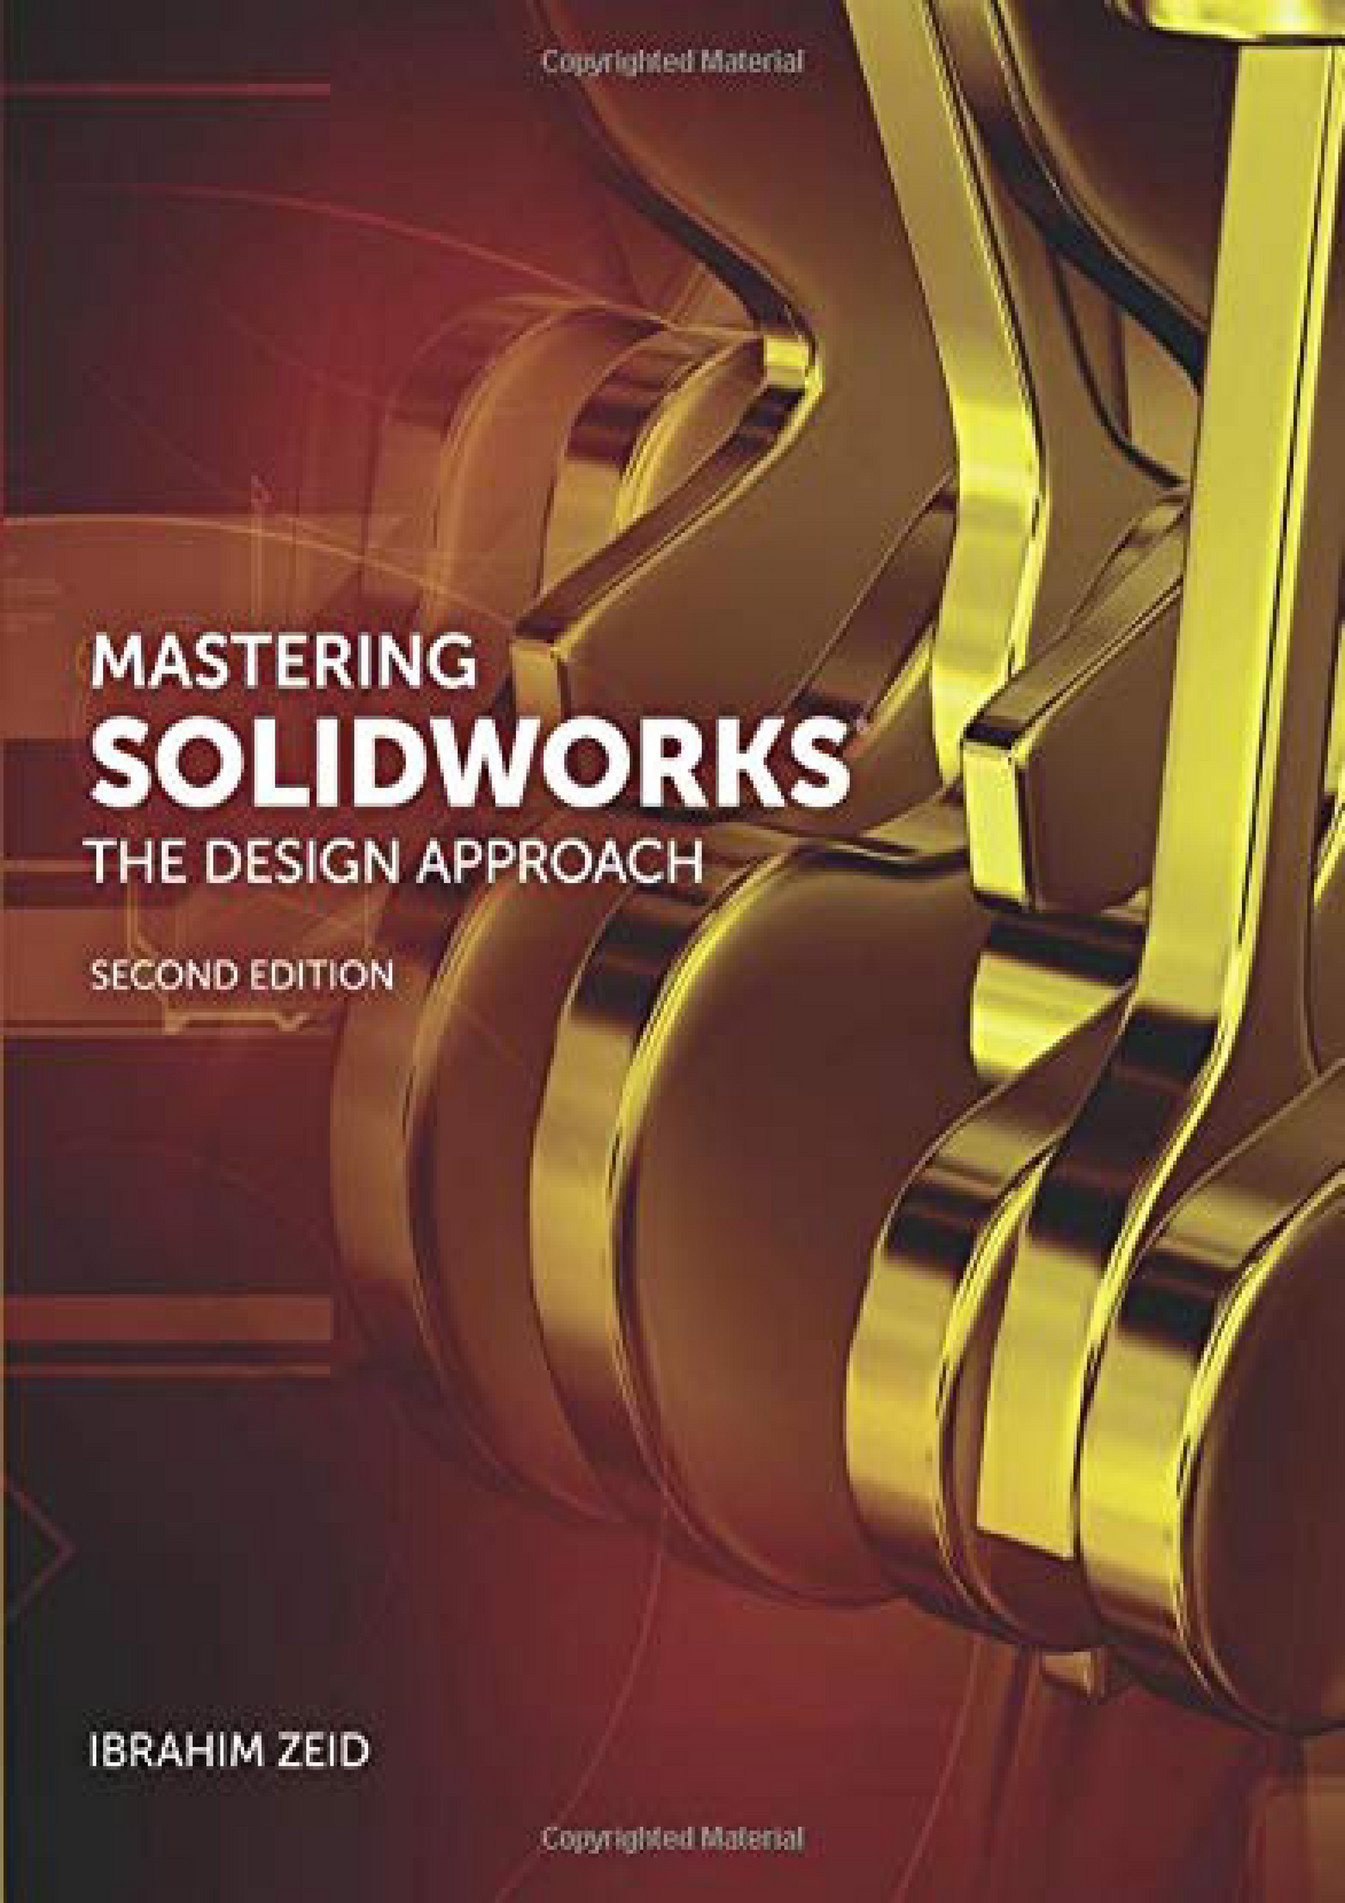 solidworks 2012 ebook free download